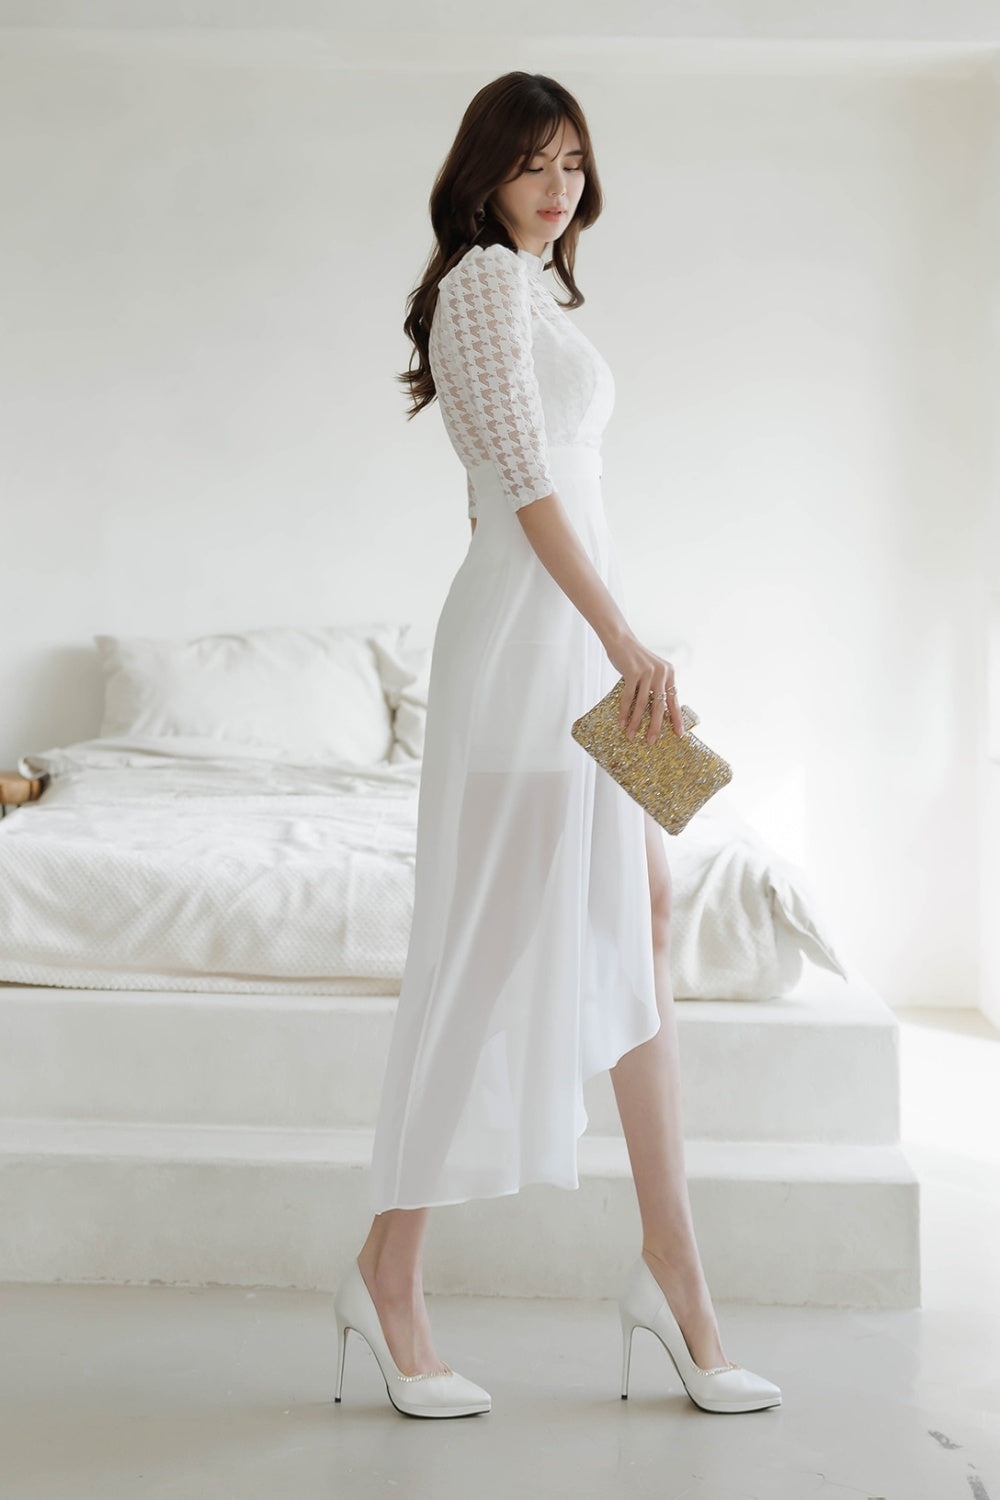 CM-DY007662 Women Elegant Seoul Style Stand Collar Half Sleeve Lace Dress - White